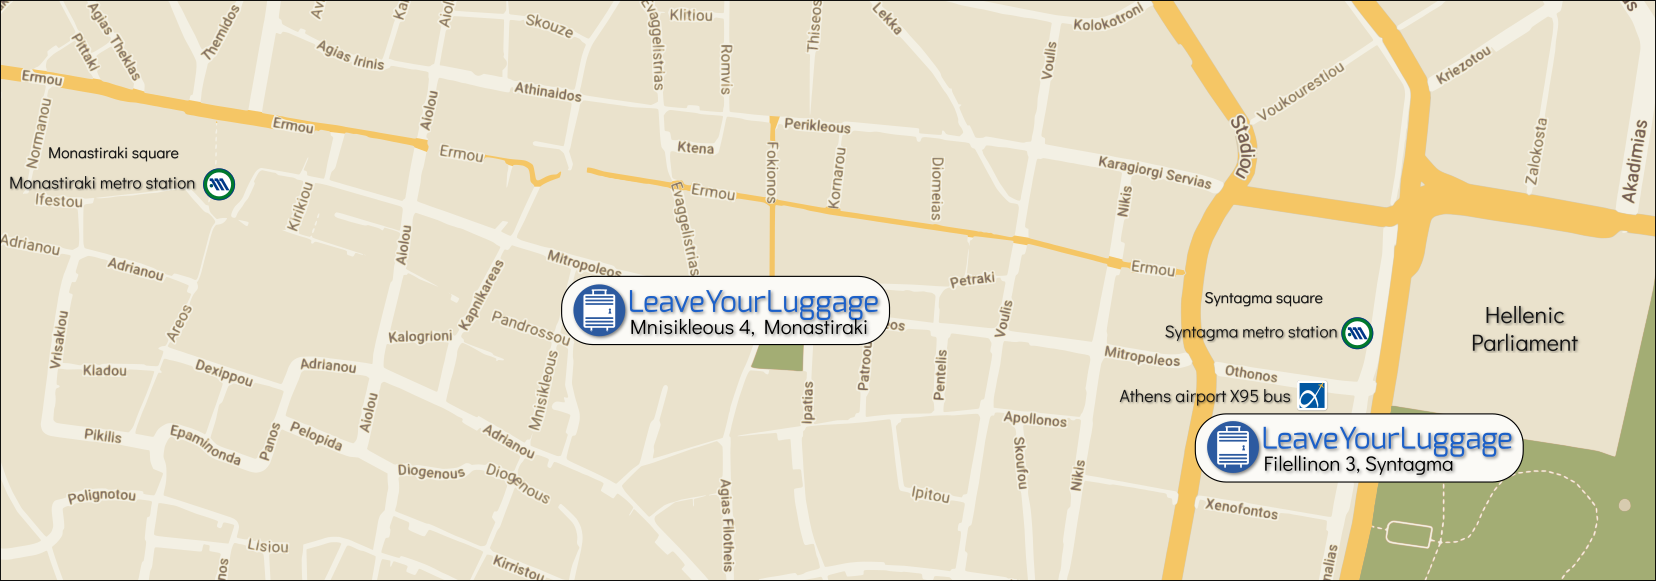 LeaveYourLuggage.gr - Μνησικλέους 4, Μοναστηρακι - Φιλελληνων 3, Σύνταγμα